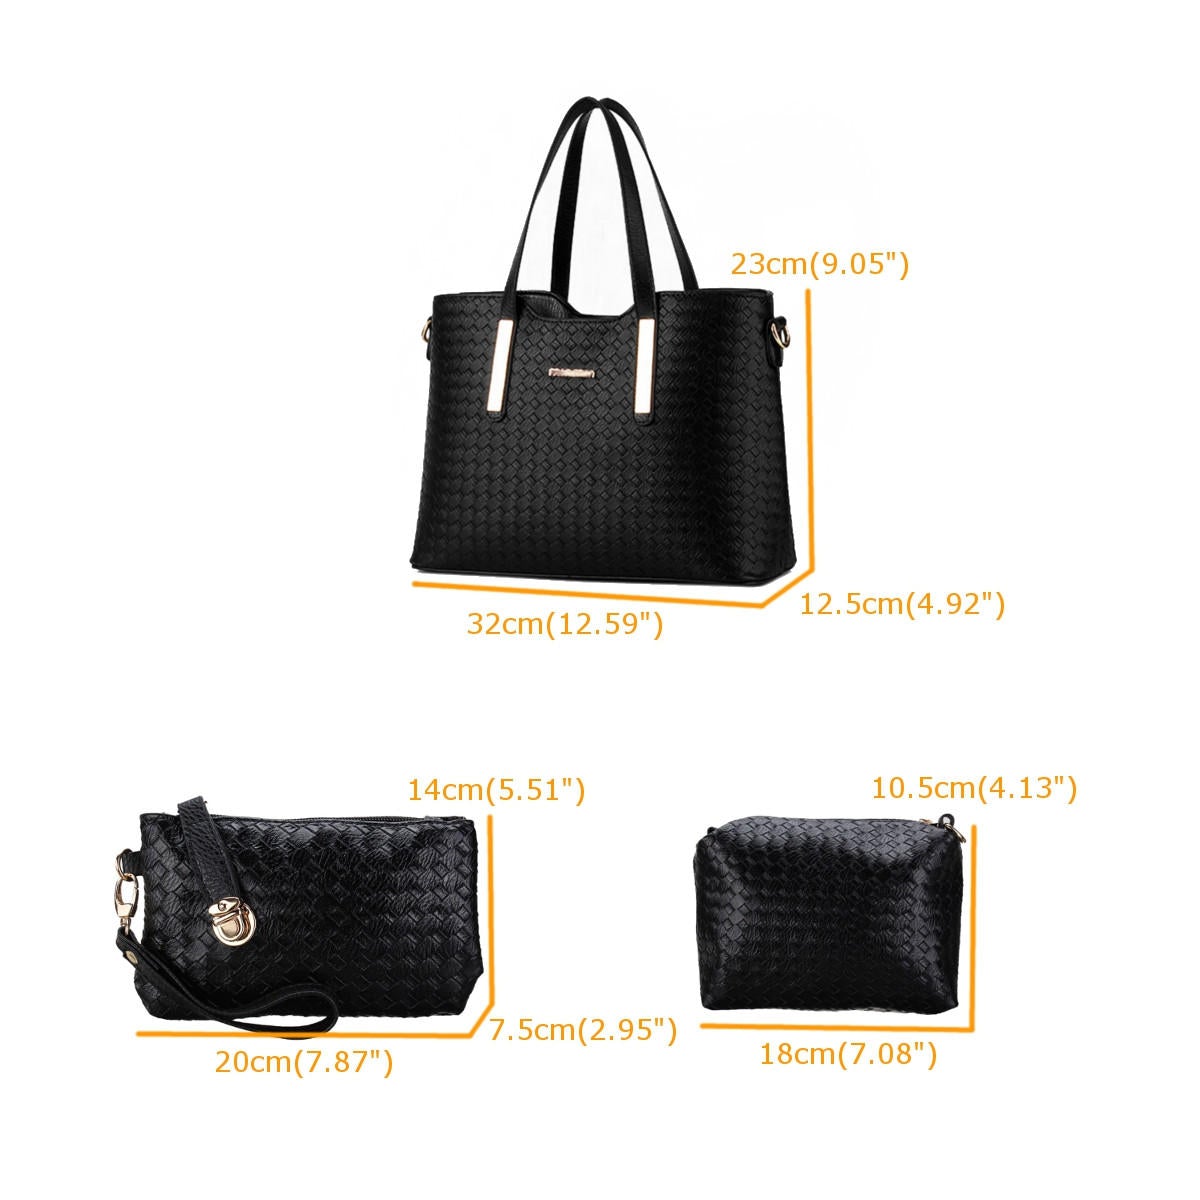 3pcs set women leather satchel handbag shoulder messenger crossbody bag